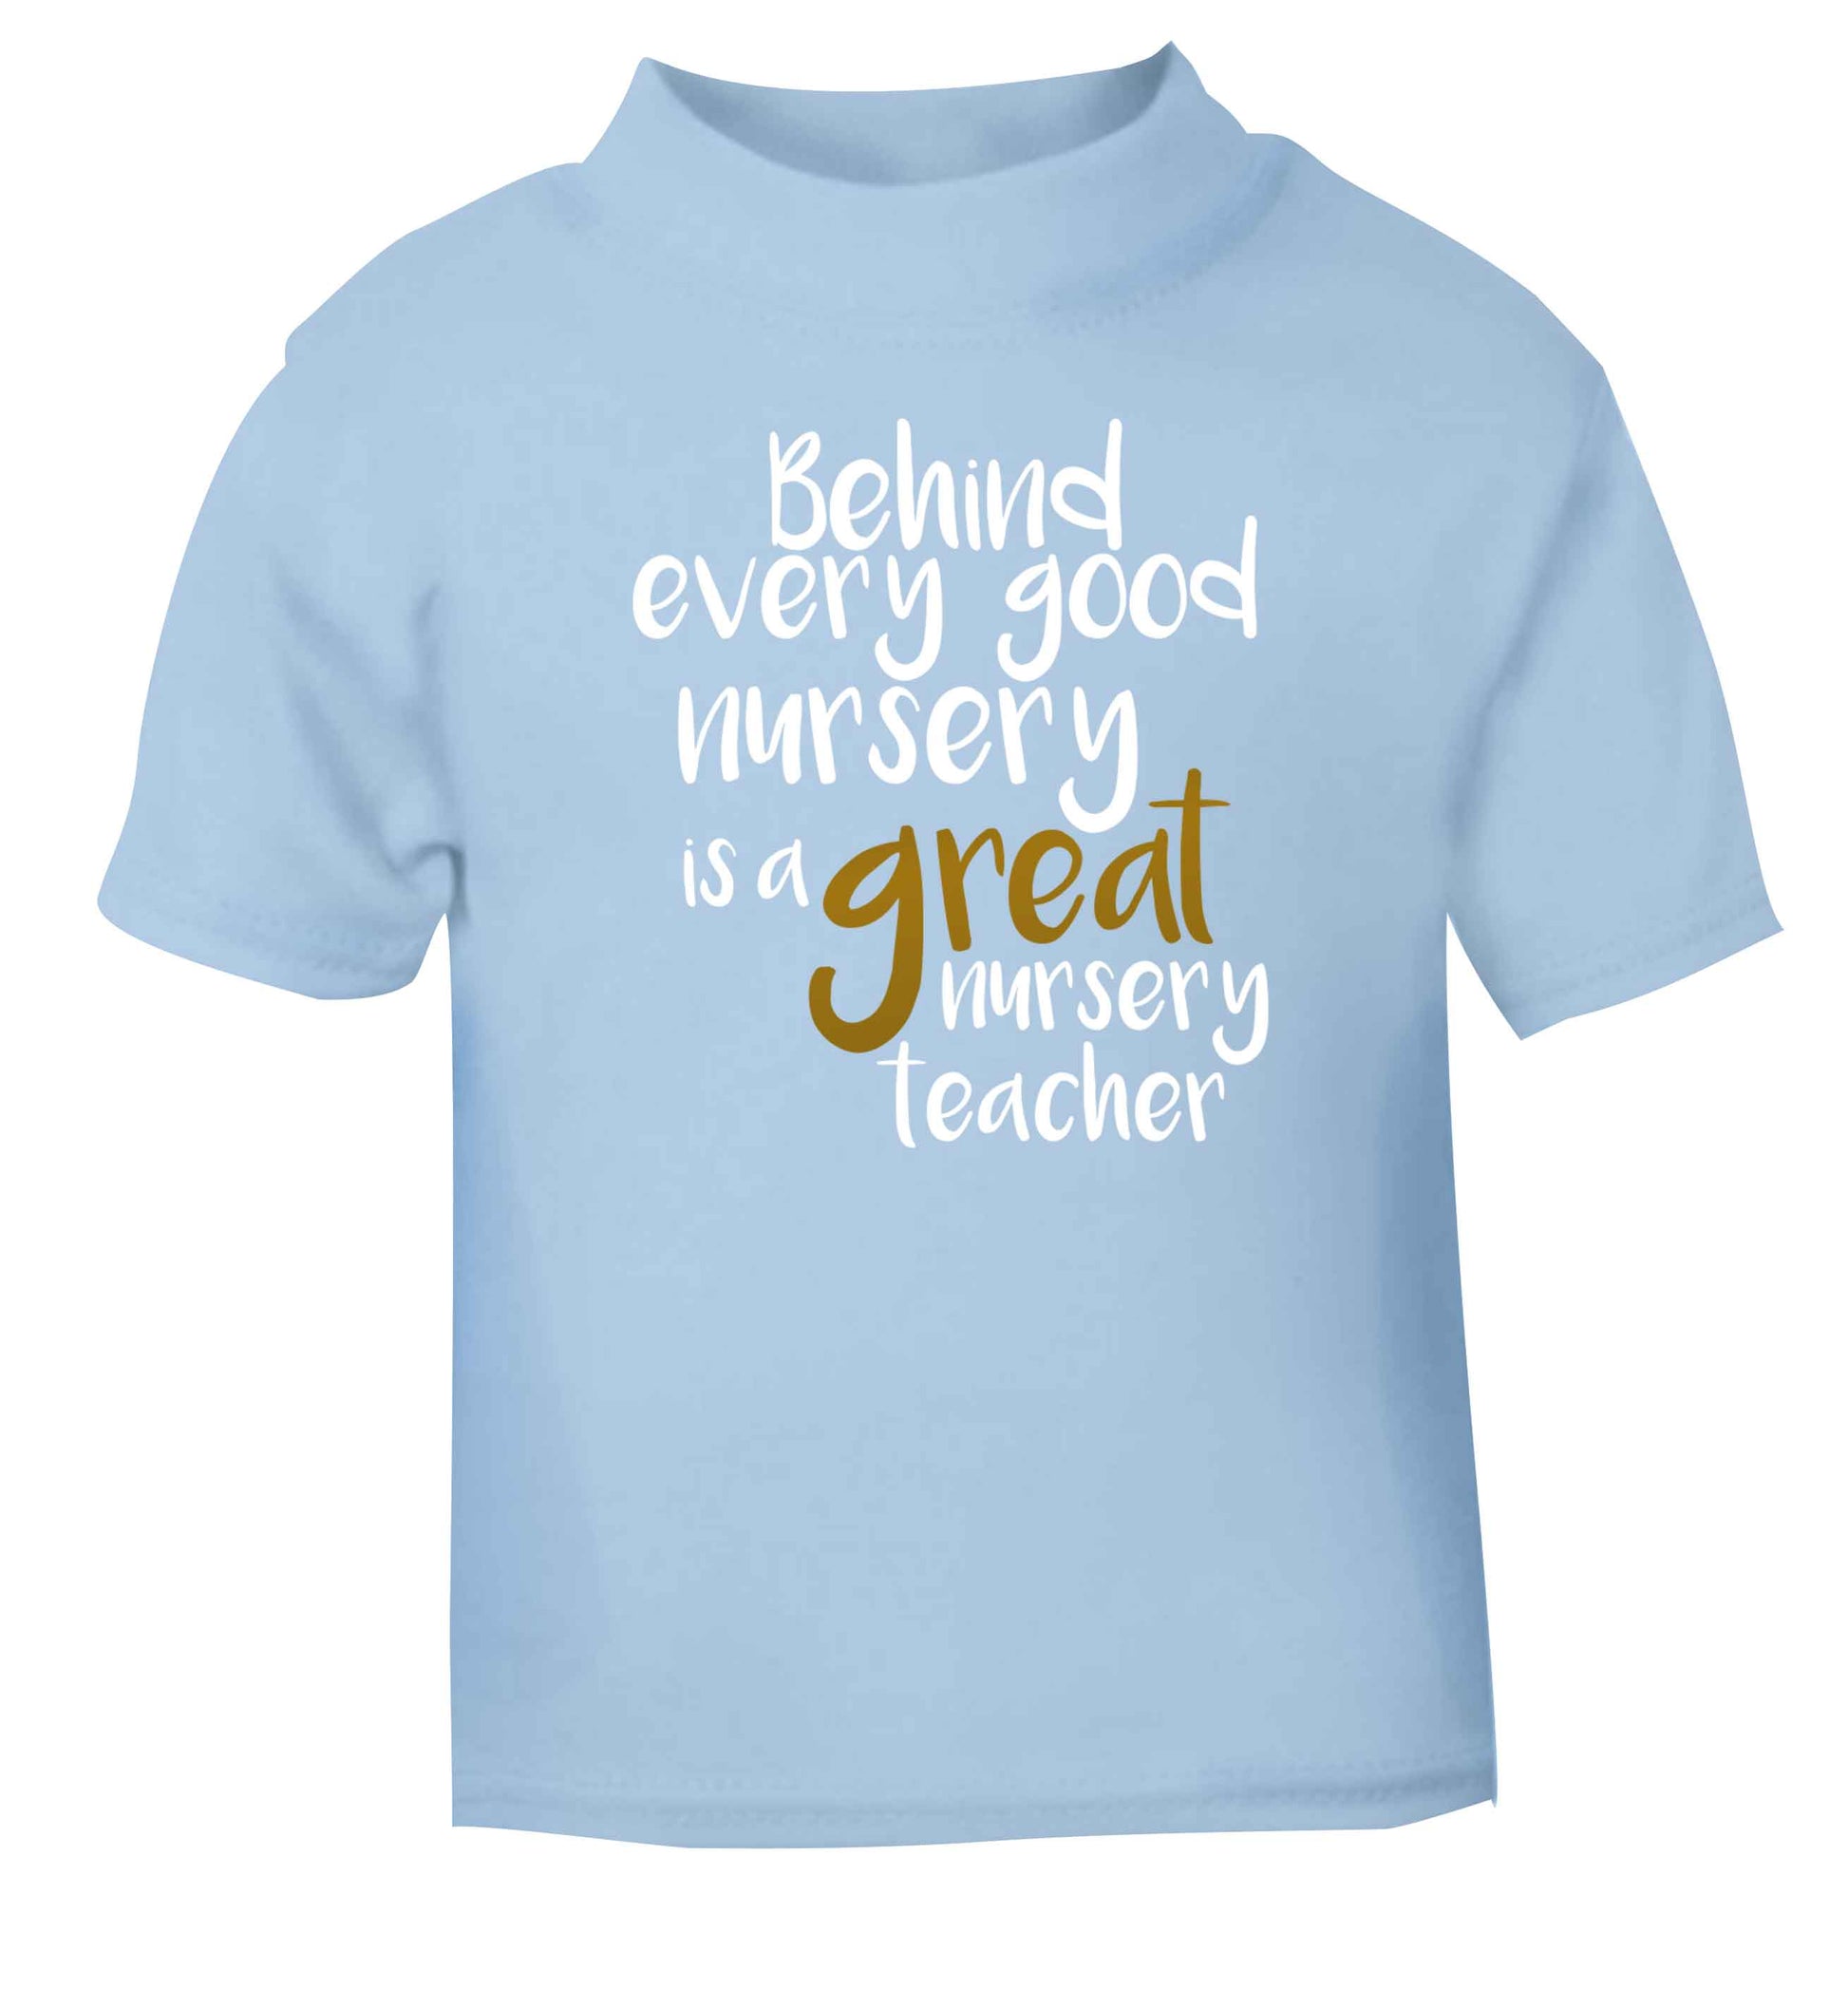 Behind every good nursery is a great nursery teacher light blue Baby Toddler Tshirt 2 Years